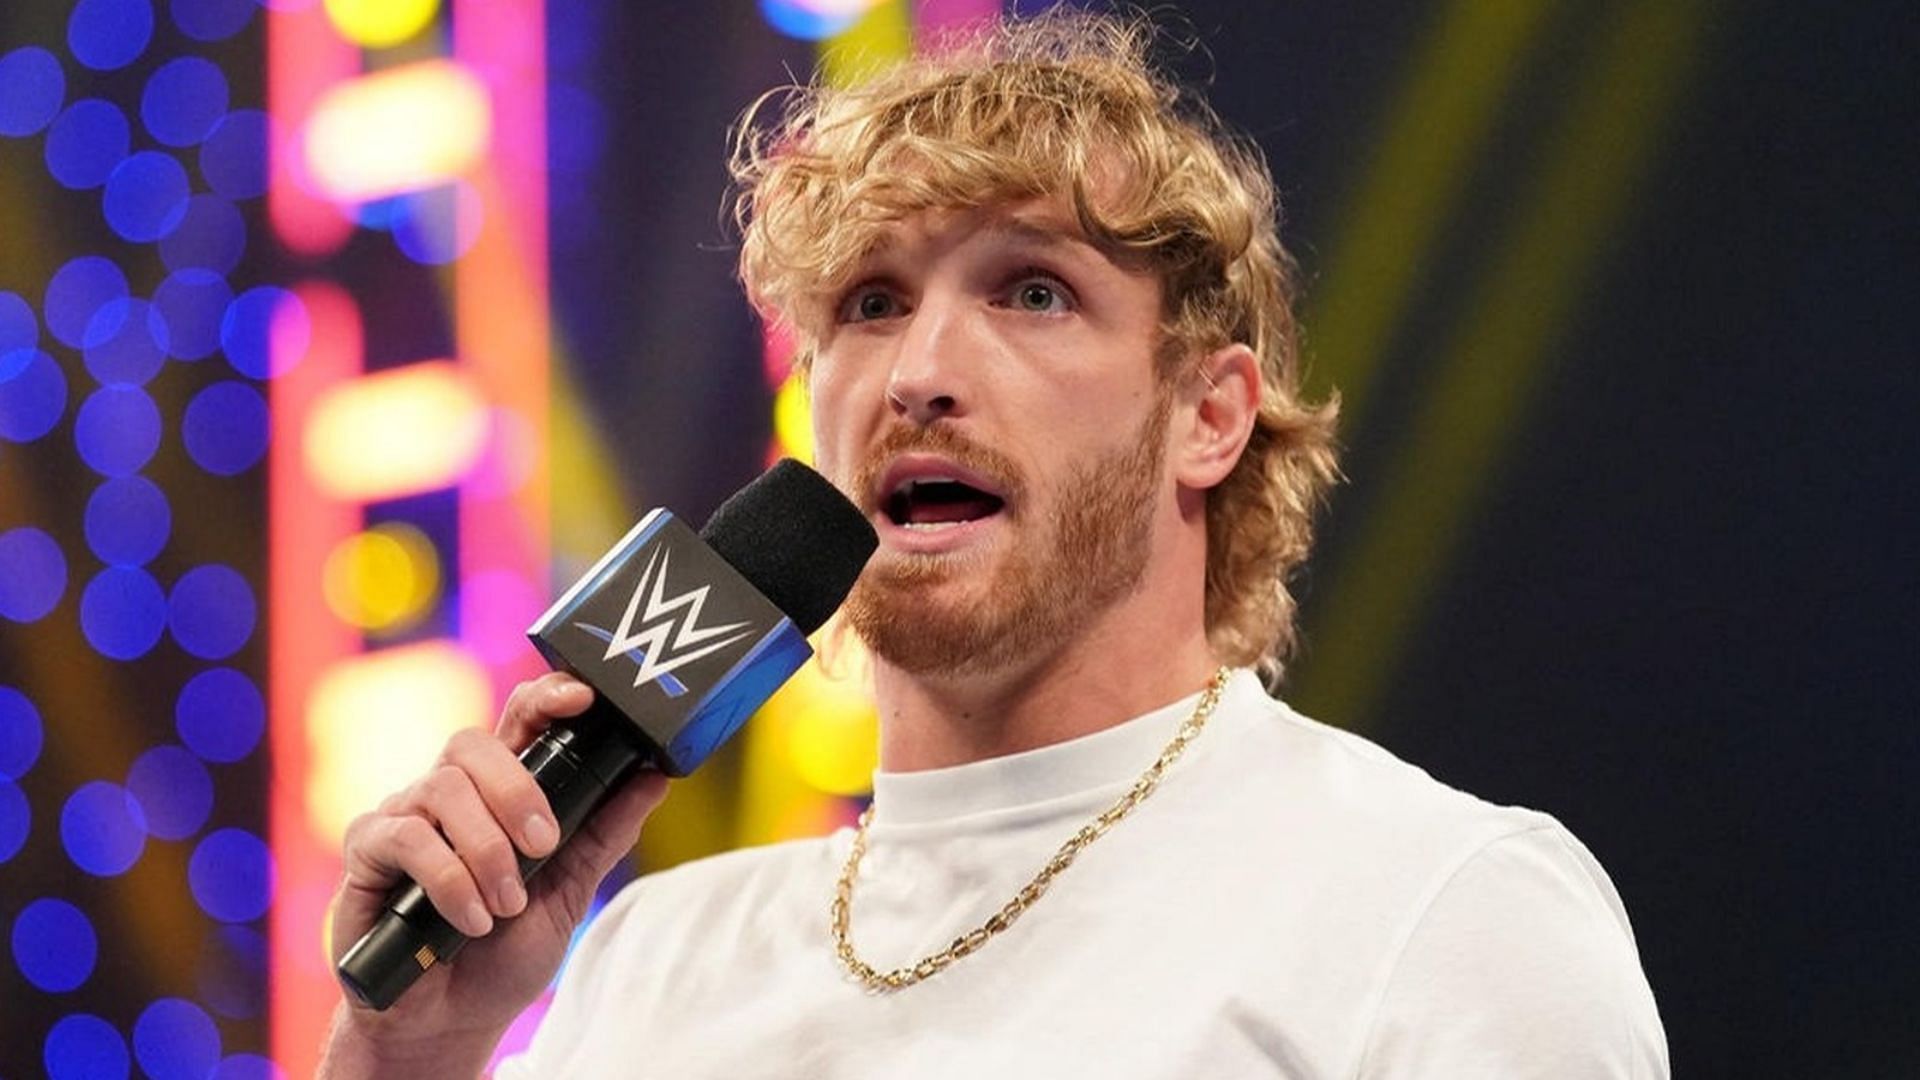 Latest update on Logan Paul's WWE return - Reports